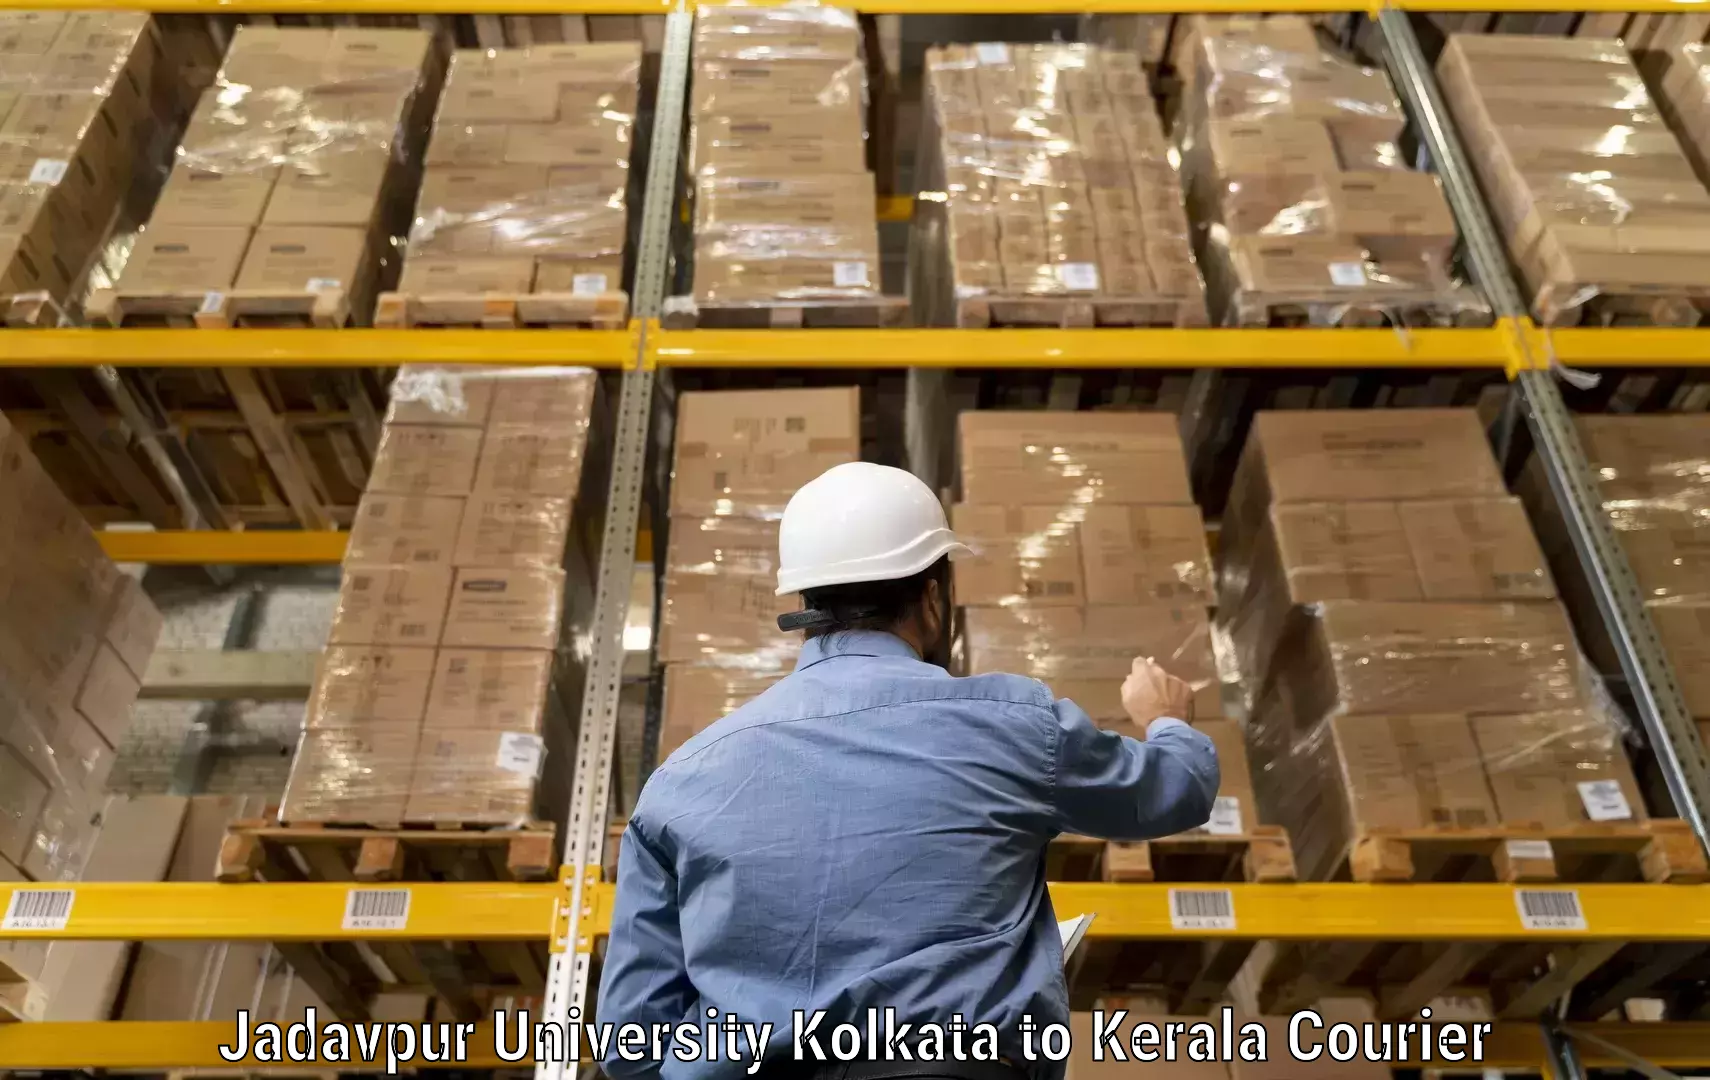 Pharmaceutical courier Jadavpur University Kolkata to Kerala